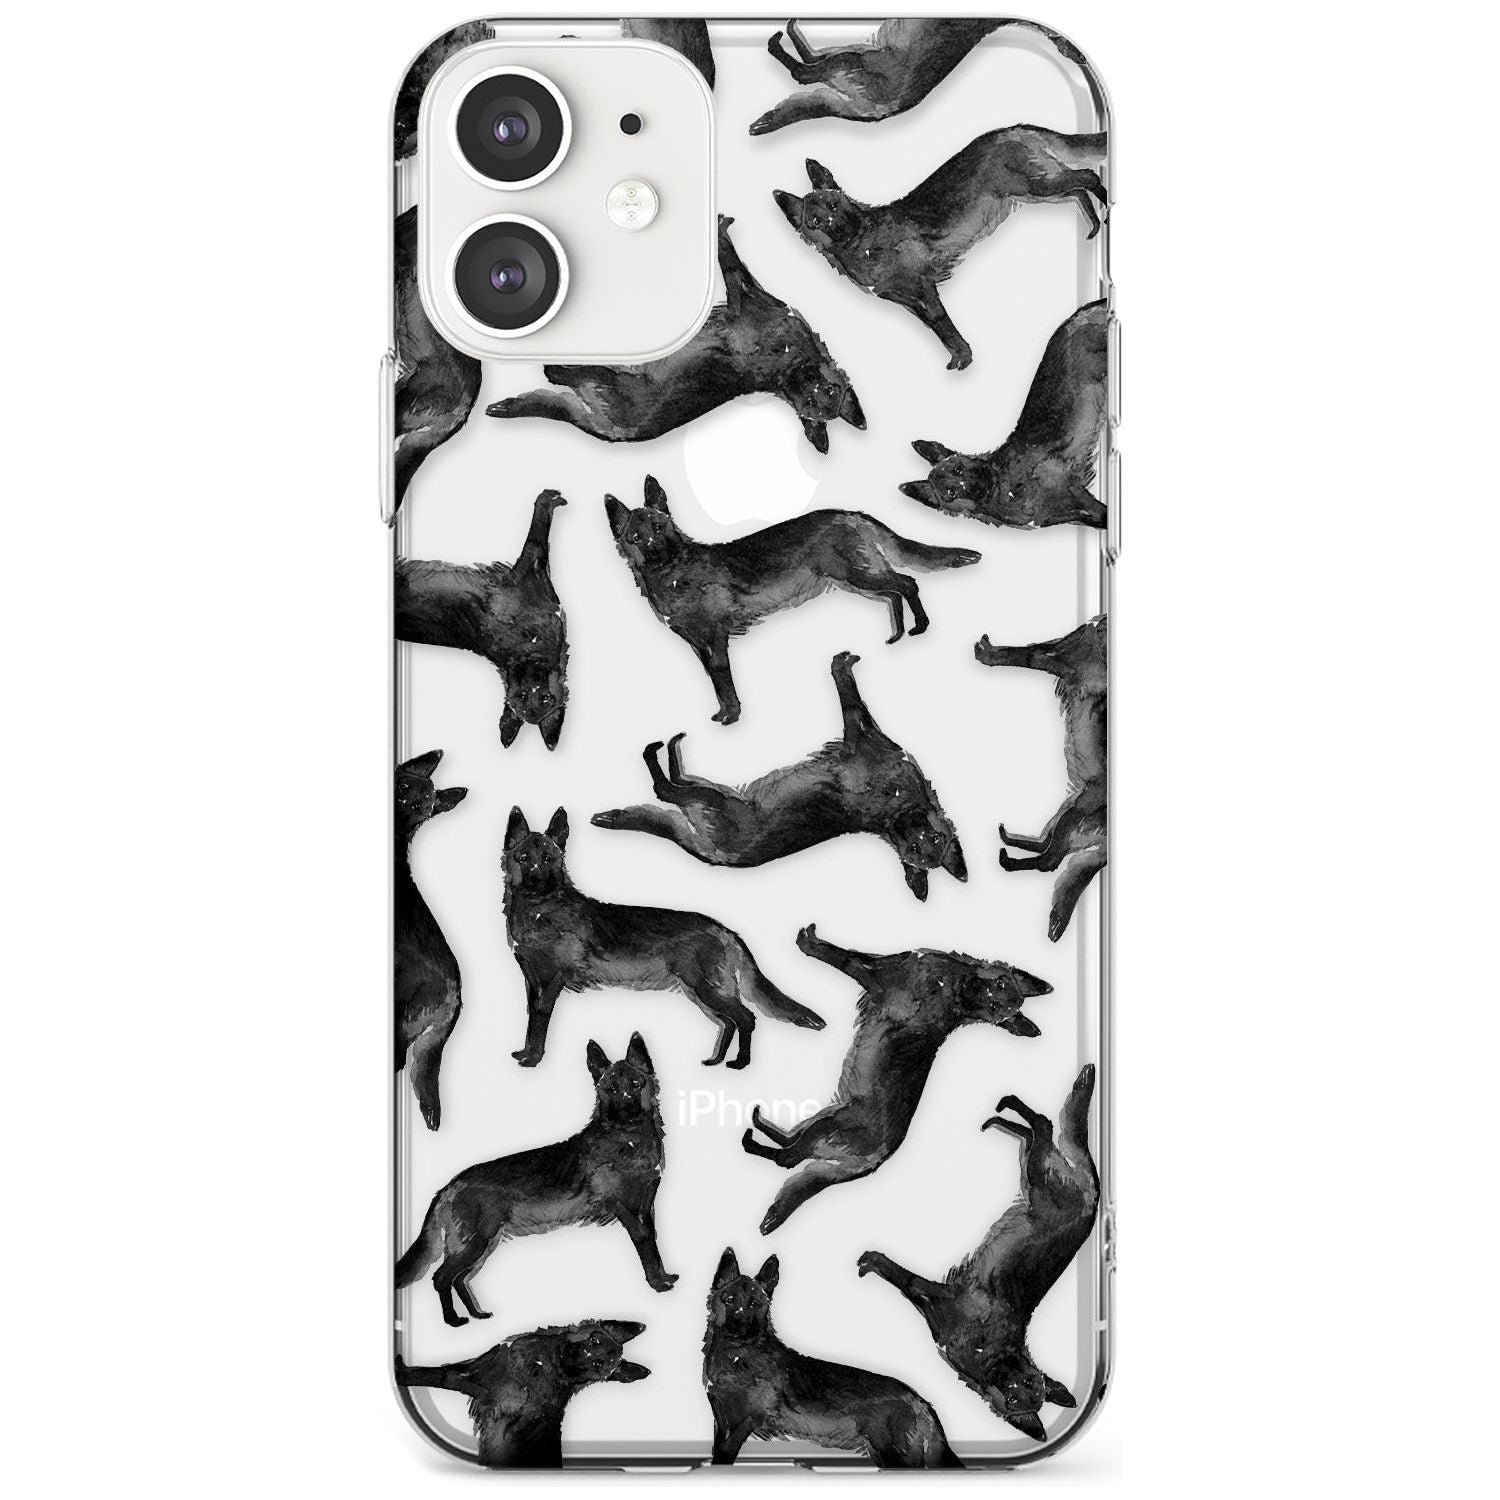 German Shepherd (Black) Watercolour Dog Pattern Slim TPU Phone Case for iPhone 11